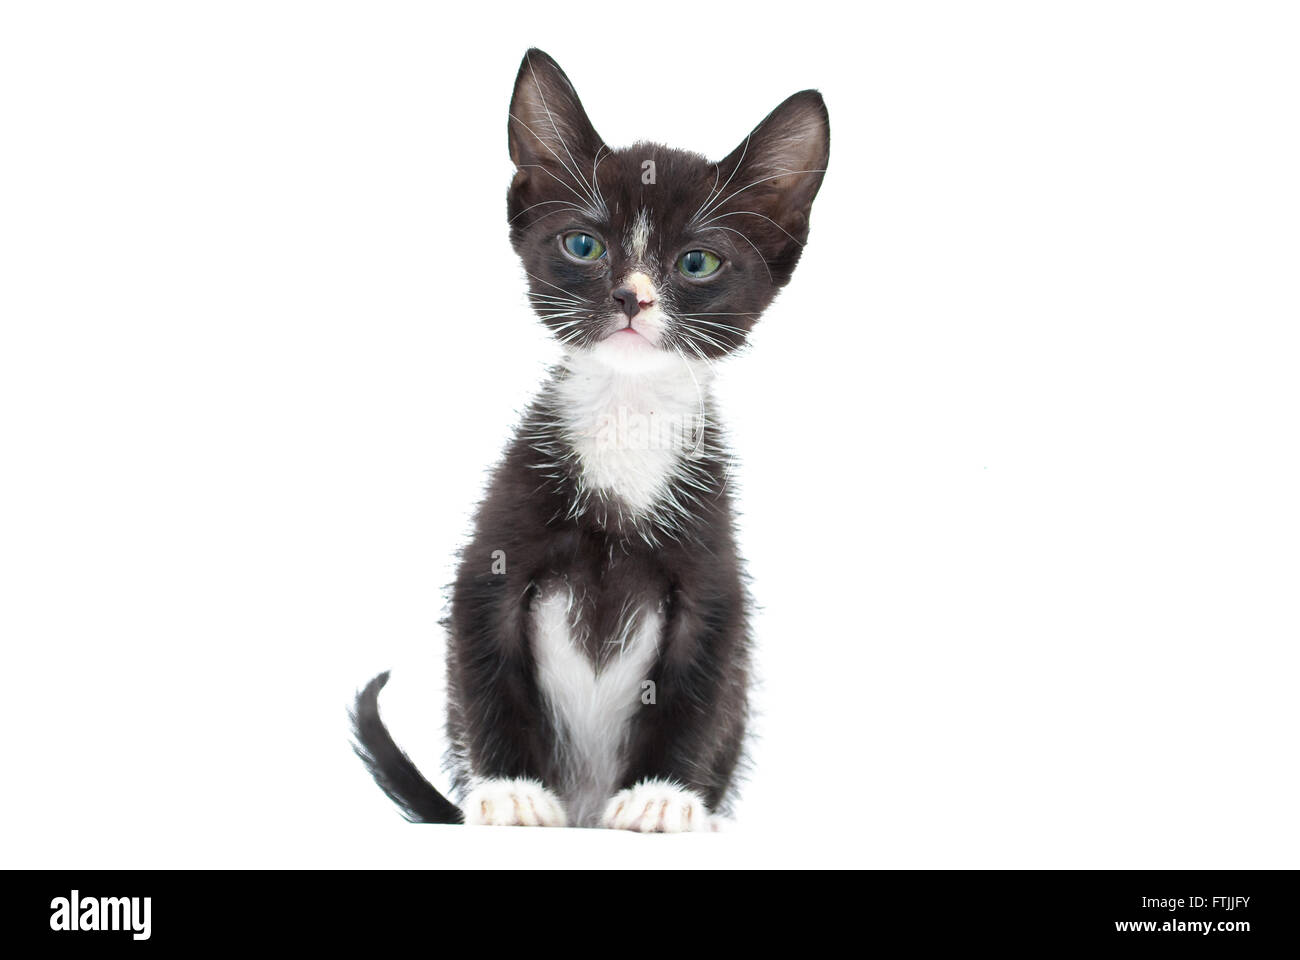 A Beautiful Tuxedo black and white kitten on a white background. Stock Photo